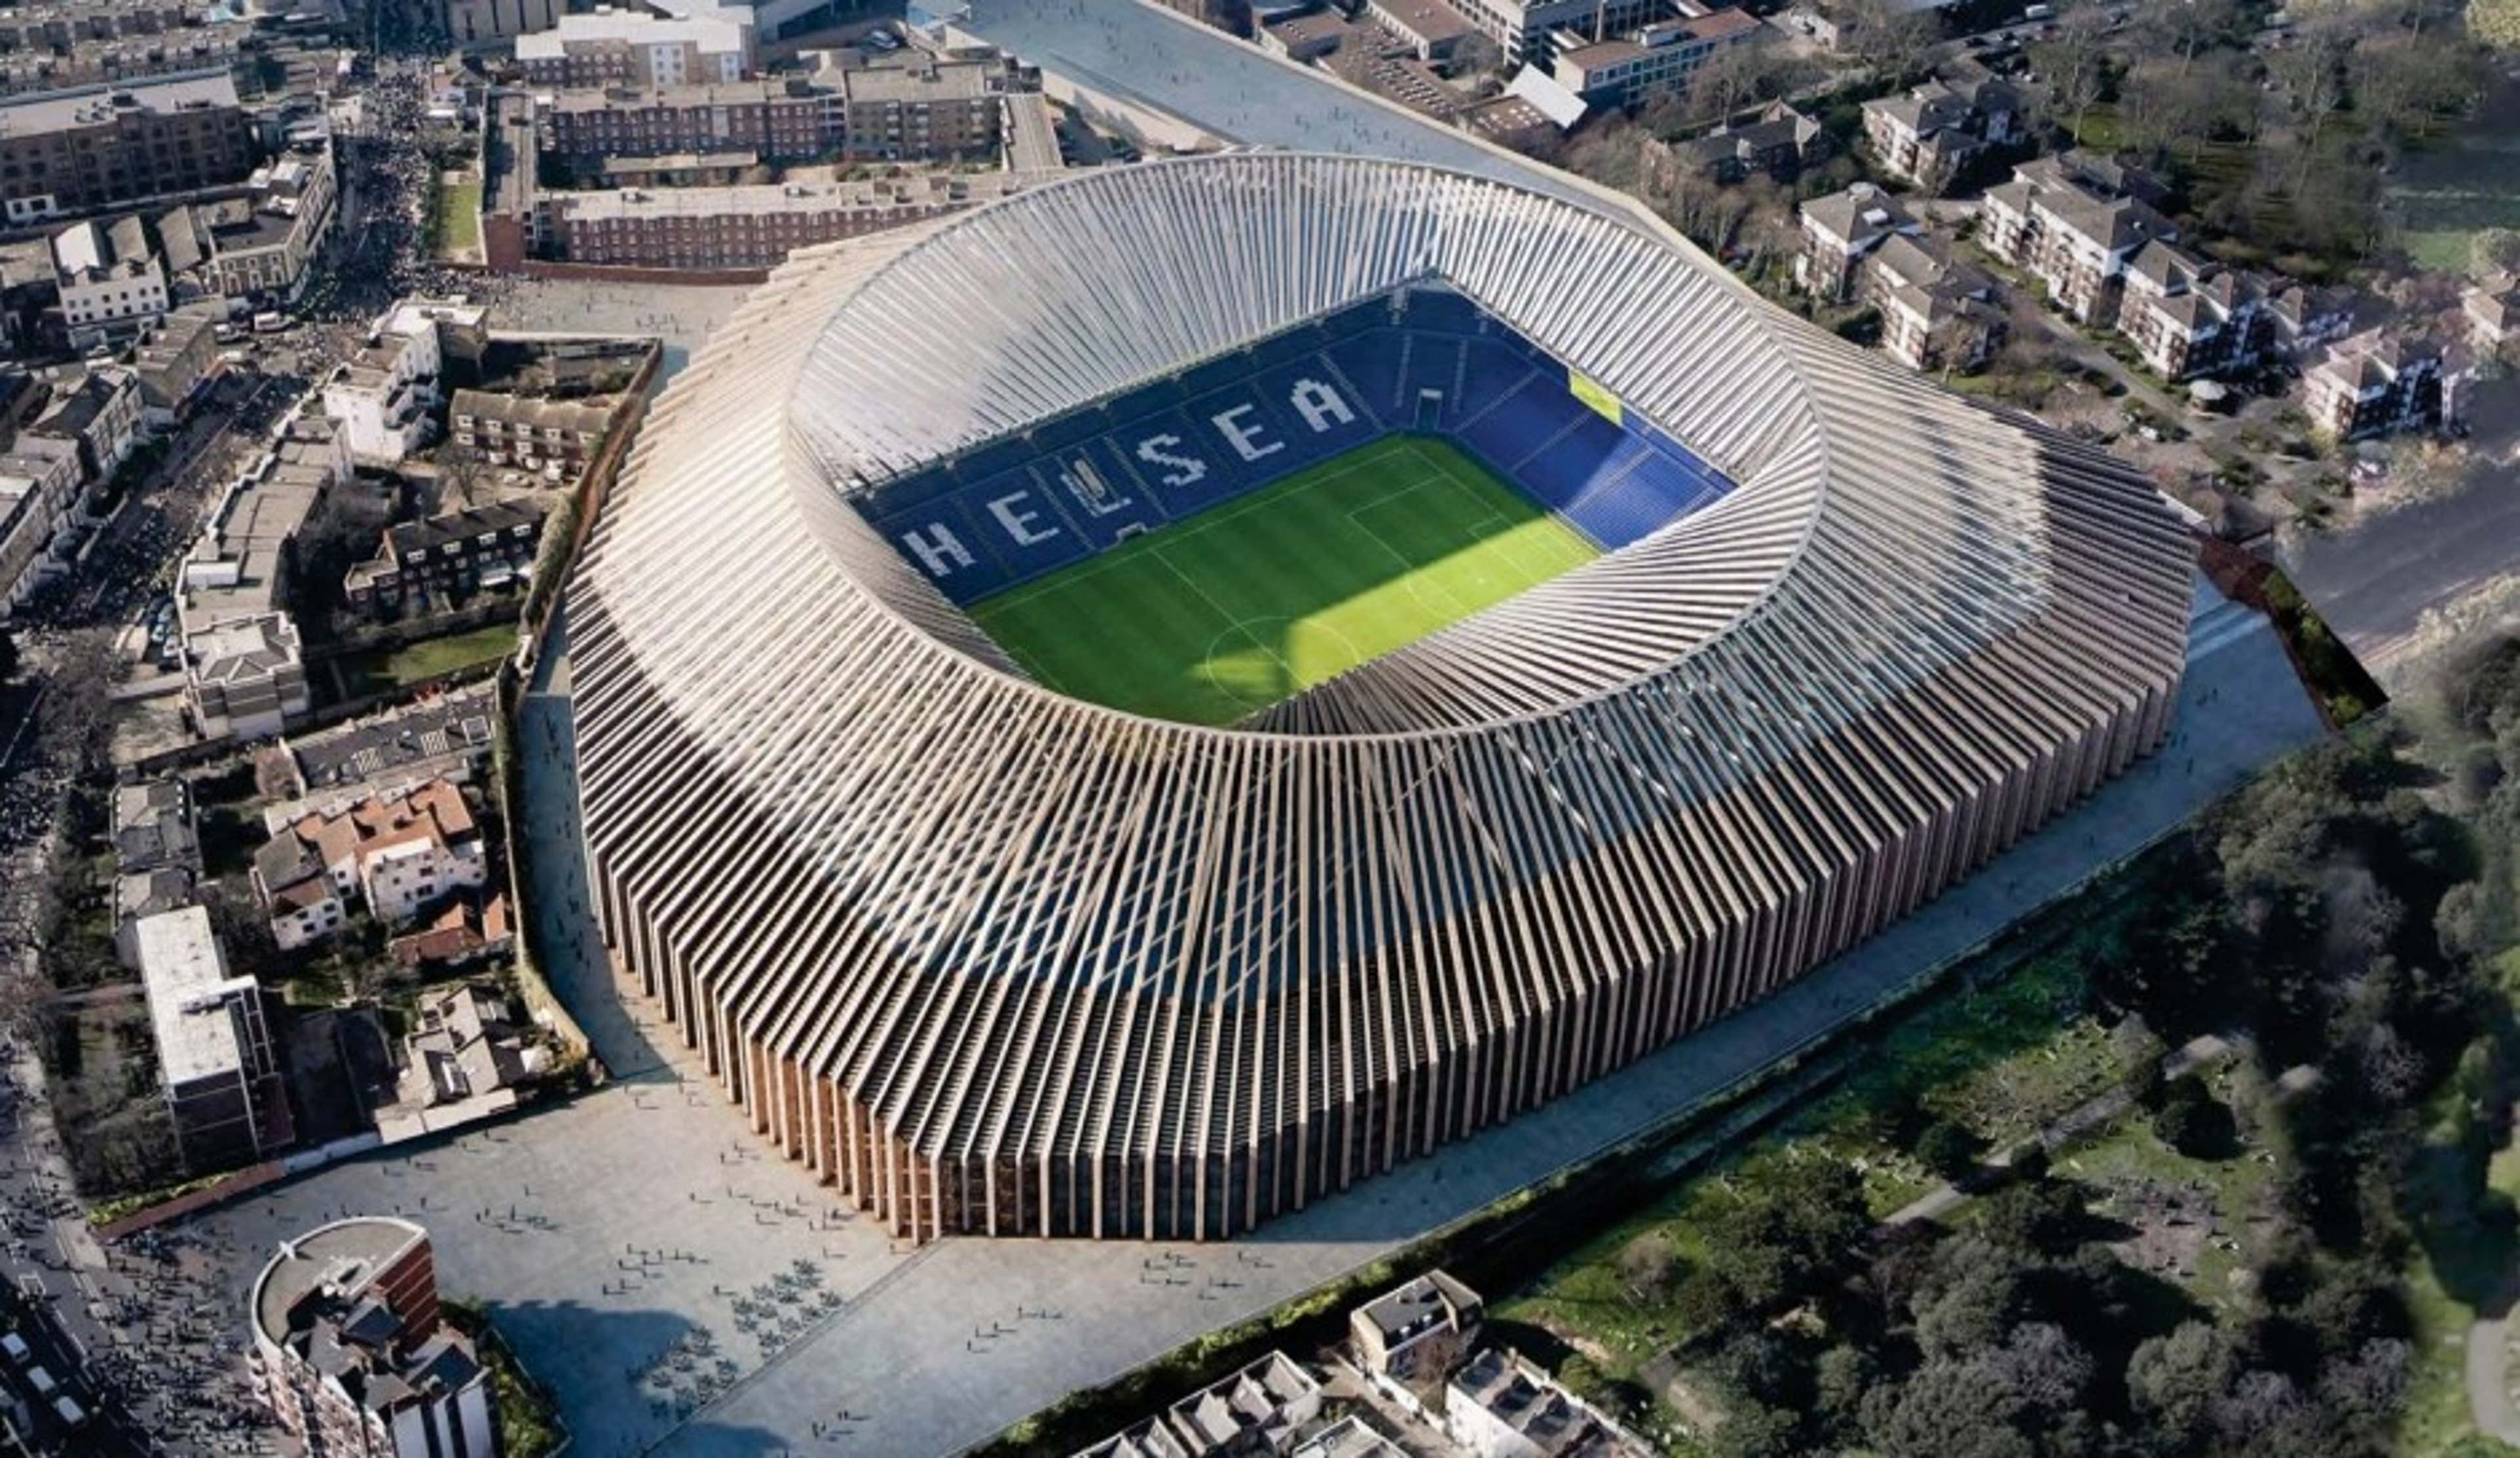 Фото нового стадиона. Стадион Stamford Bridge. Стэмфорд бридж новый стадион.